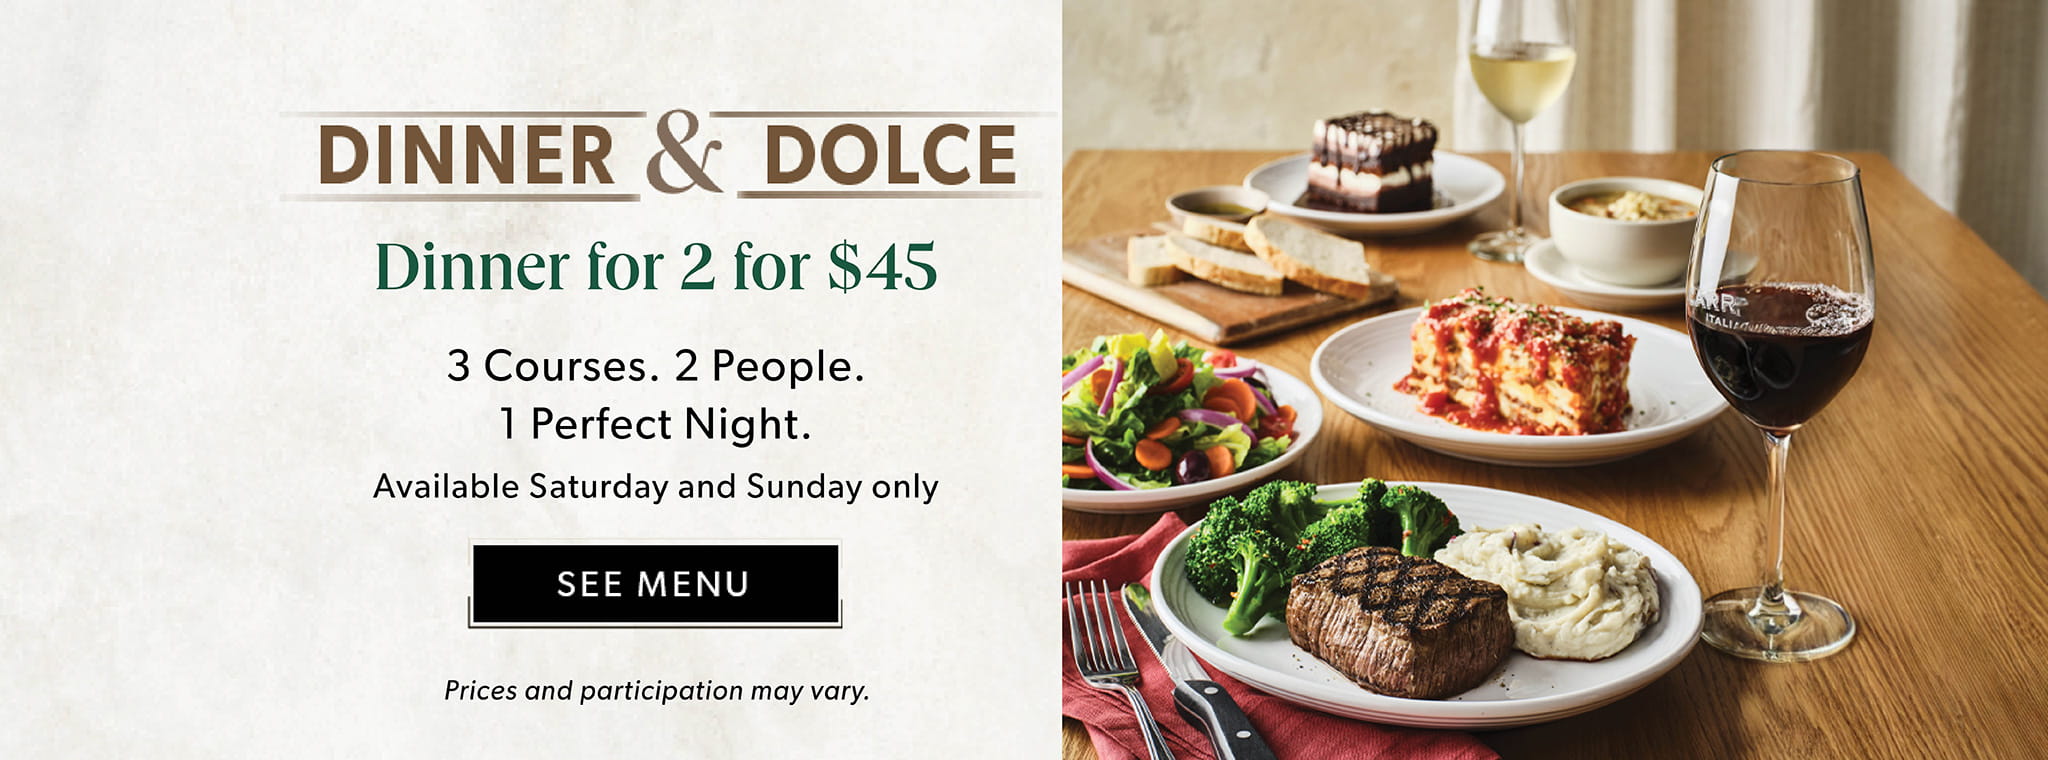 Dinner and Dolce - Dinner for 2 for $45